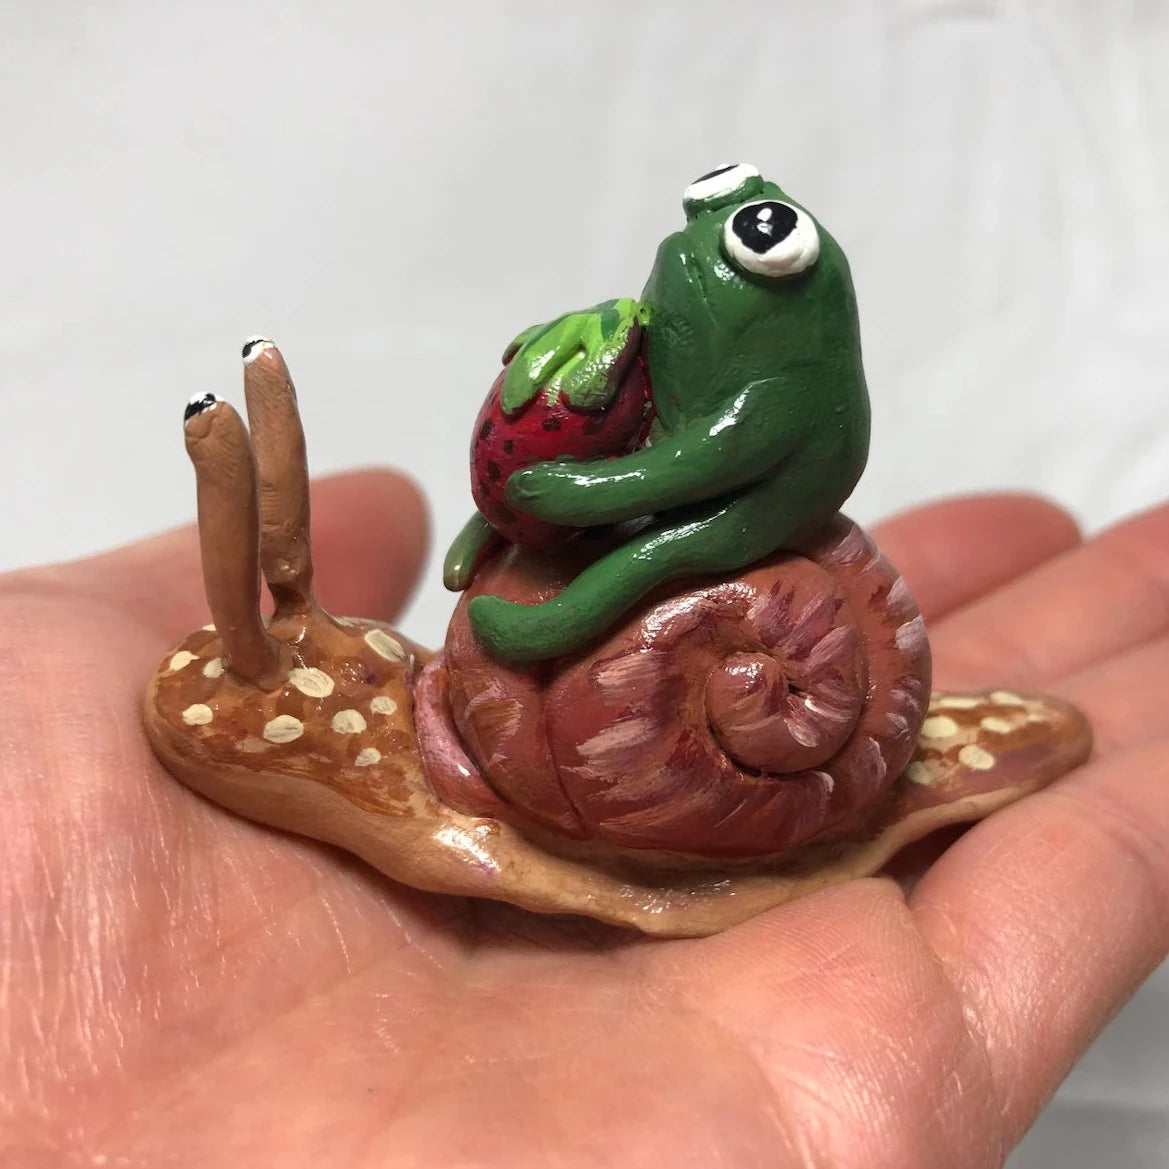 Handmade Polymer Clay Tiny Toad Riding Garden Snail Figurine